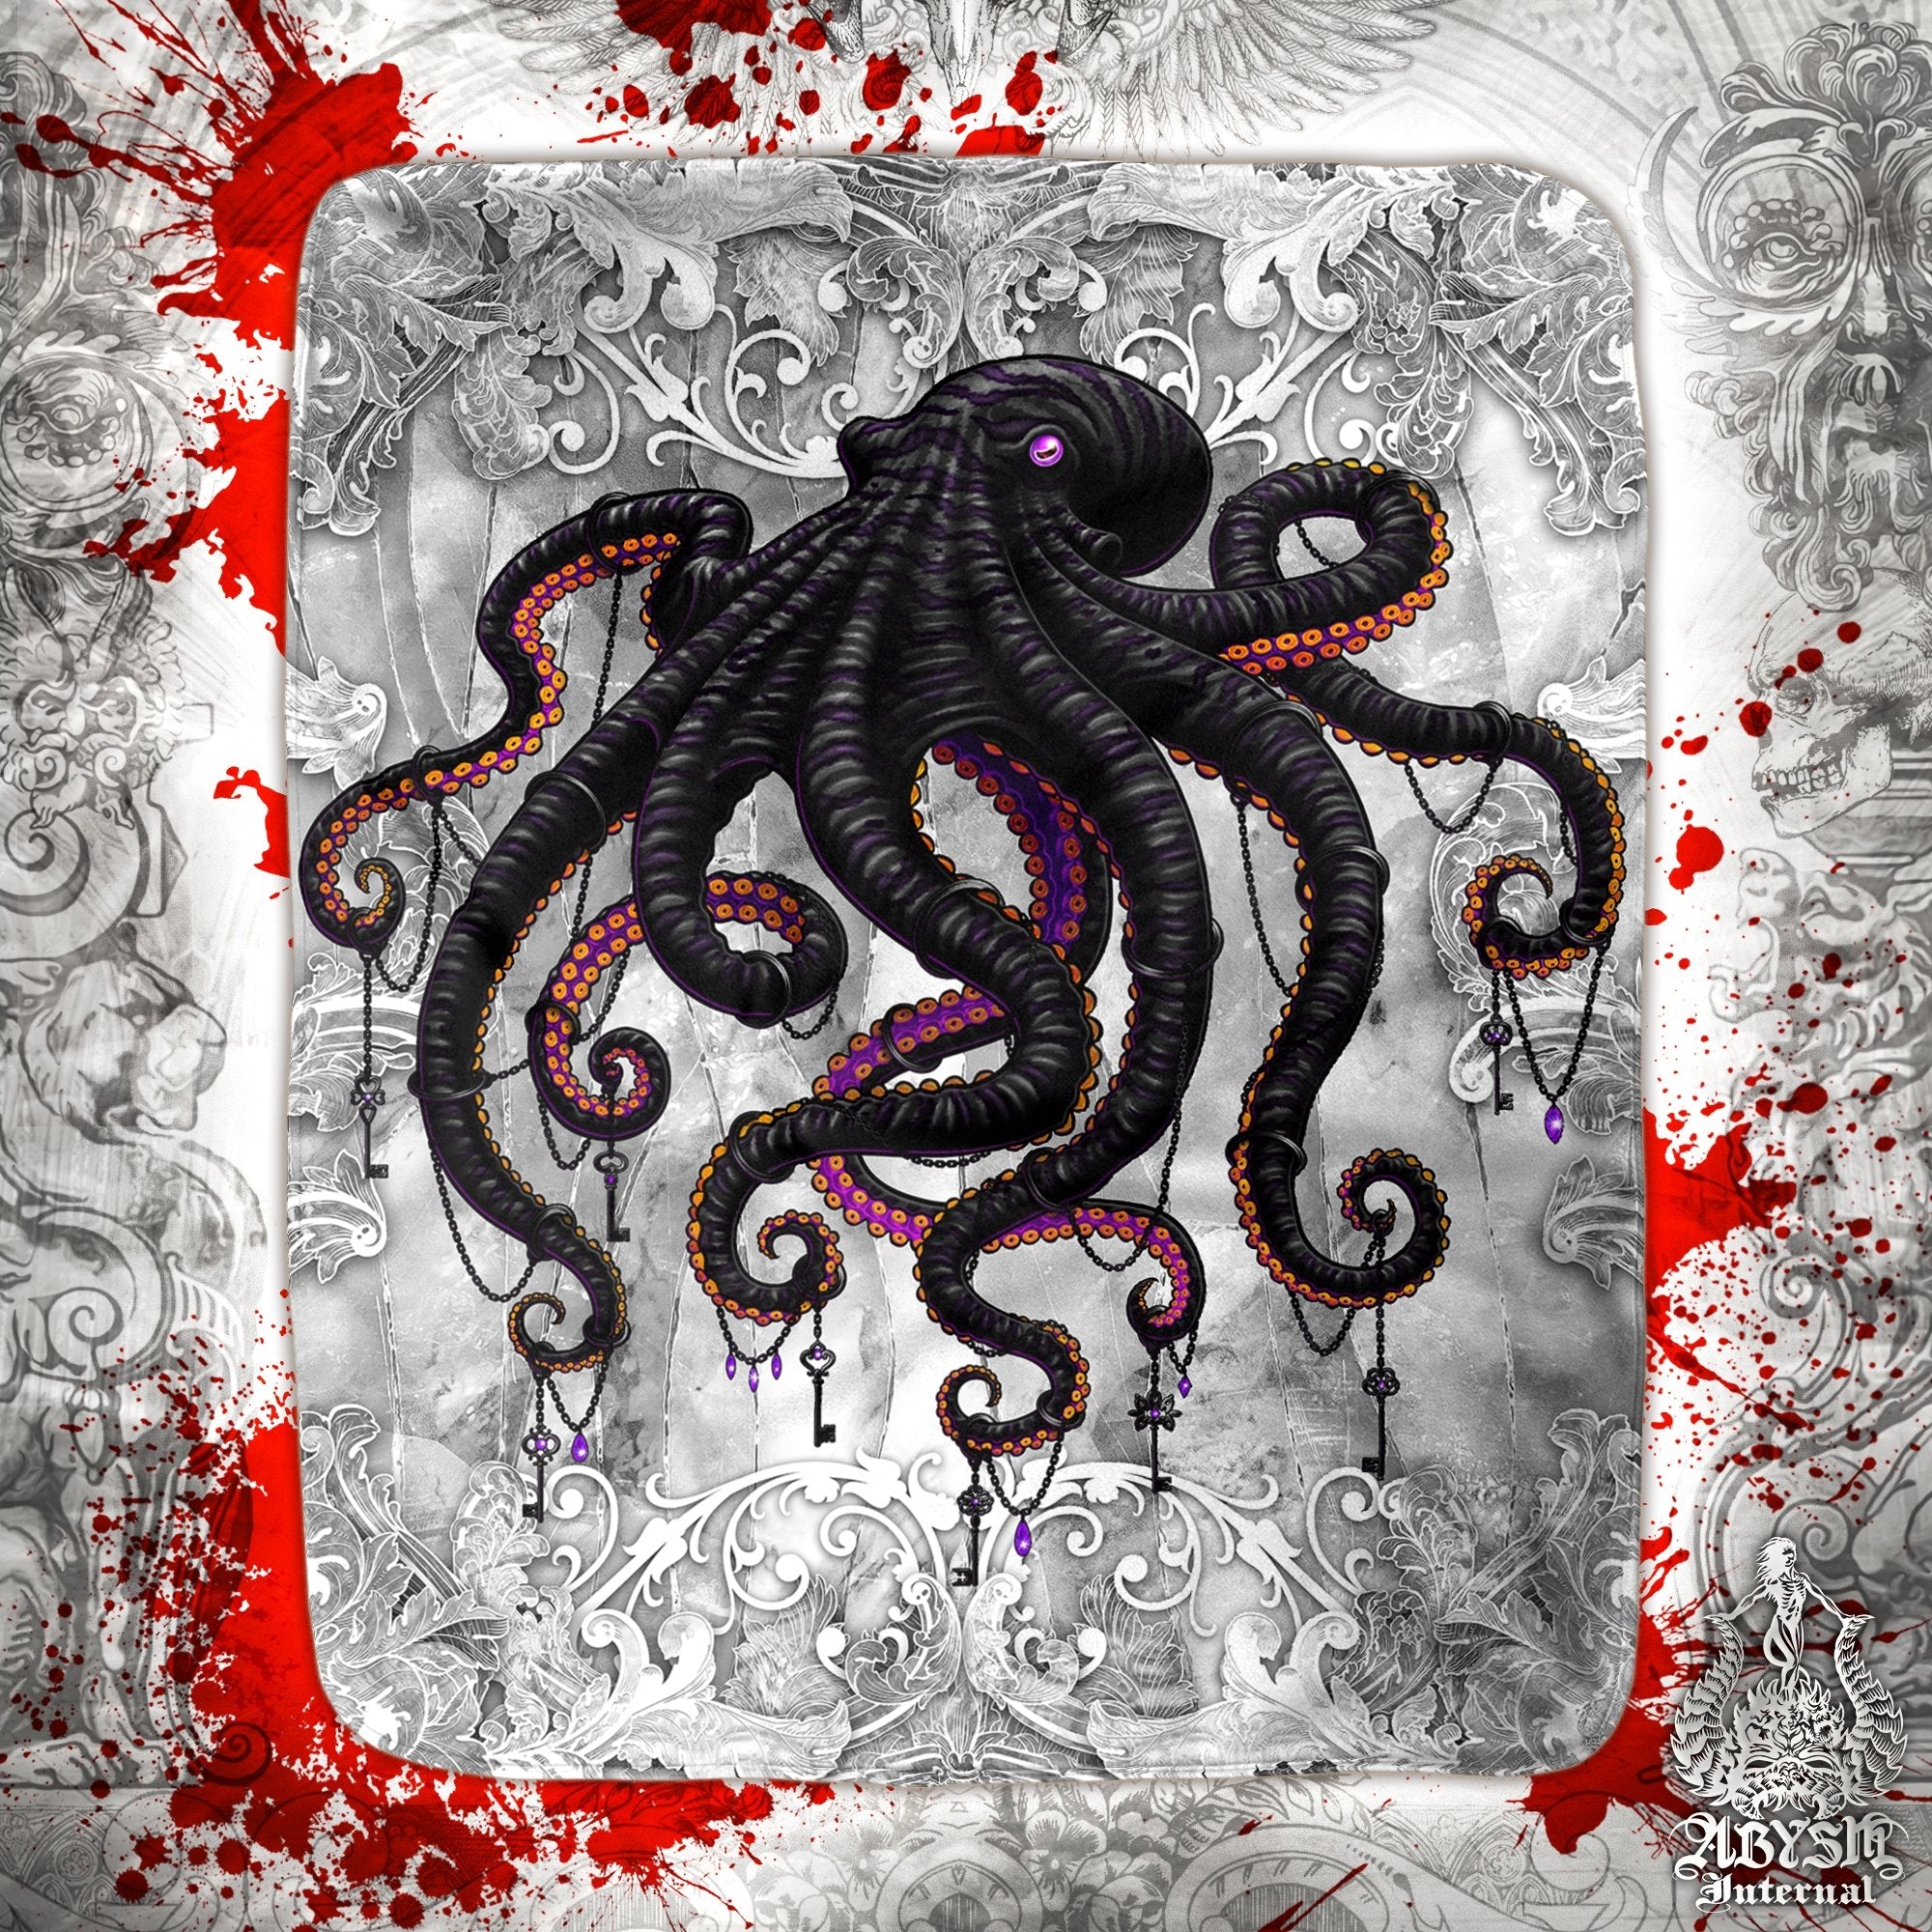 Octopus Throw Fleece Blanket, Gothic Gift, White Goth Home Decor, Alternative Art Gift - Stone - Abysm Internal